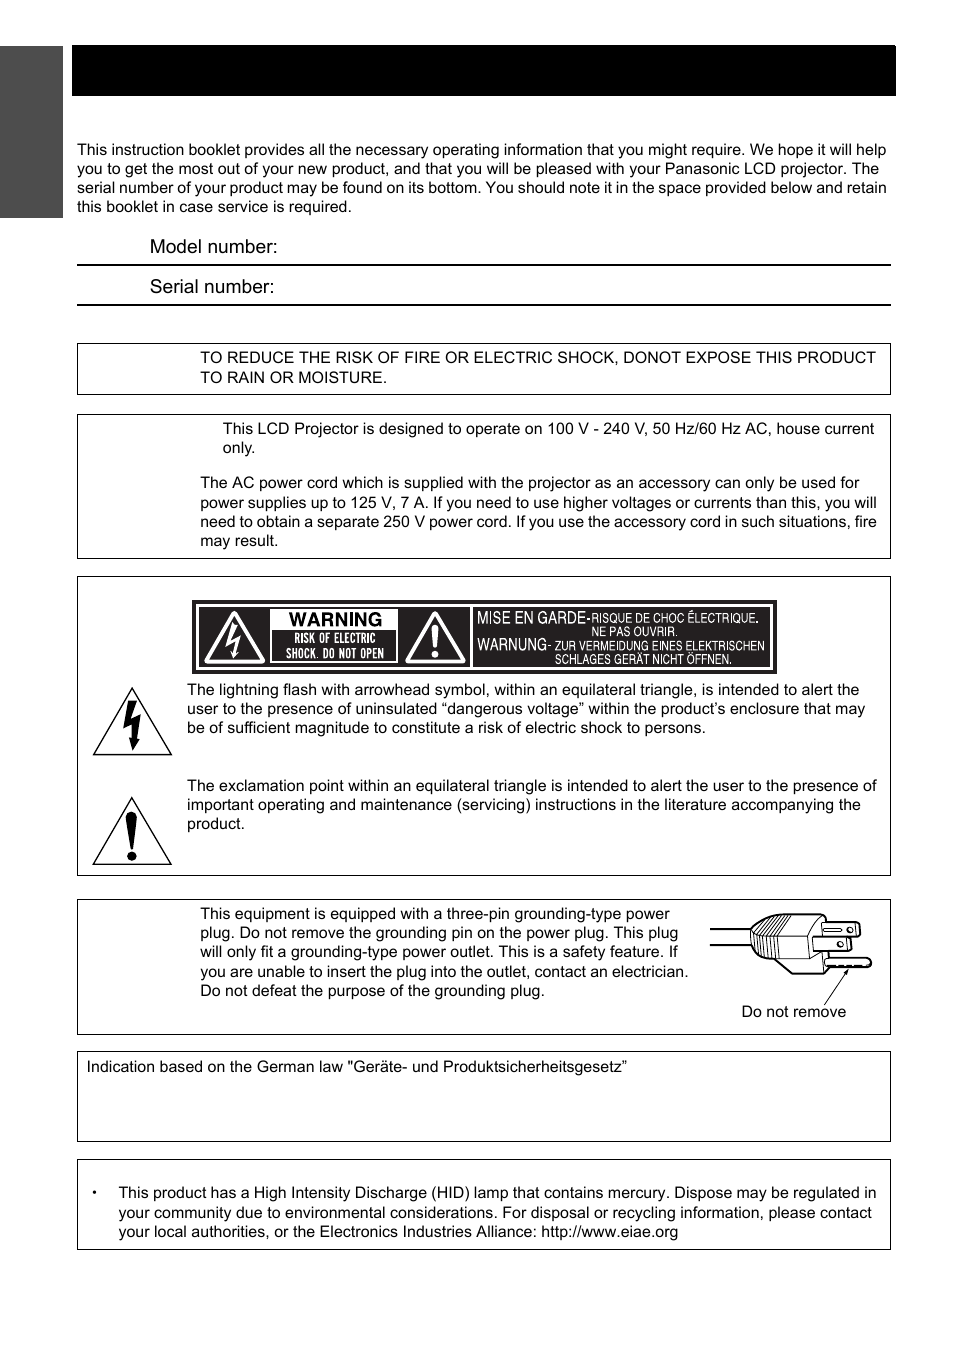 Important safety notice, Dear panasonic customer, Nglish - 2 | Panasonic PT-LB51SU Manuel d'utilisation | Page 2 / 62